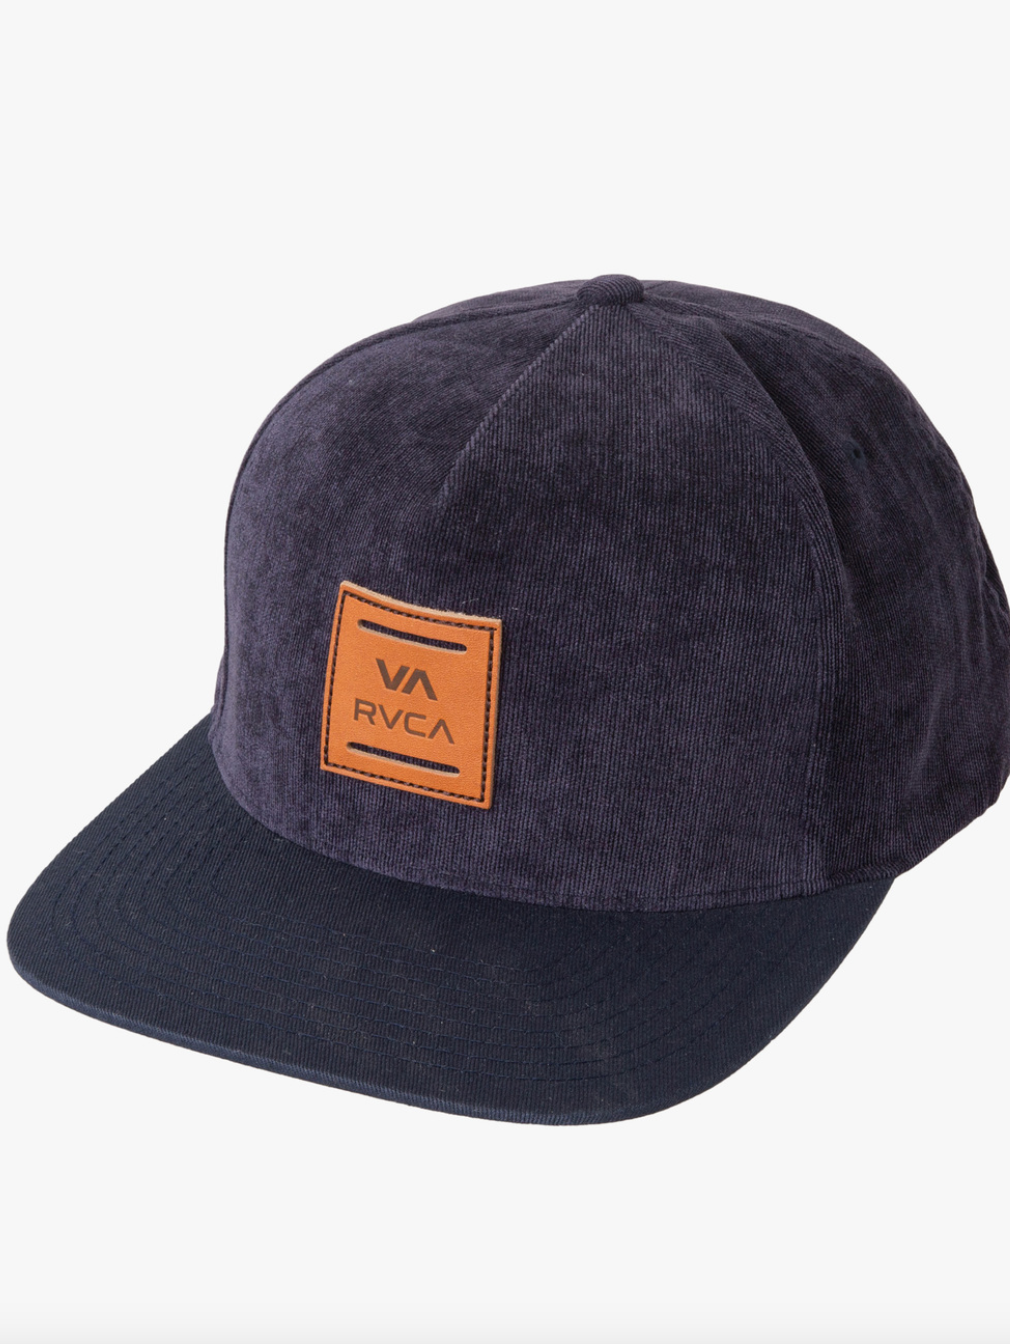 VA All The Way Snapback Hat - DARK NAVY